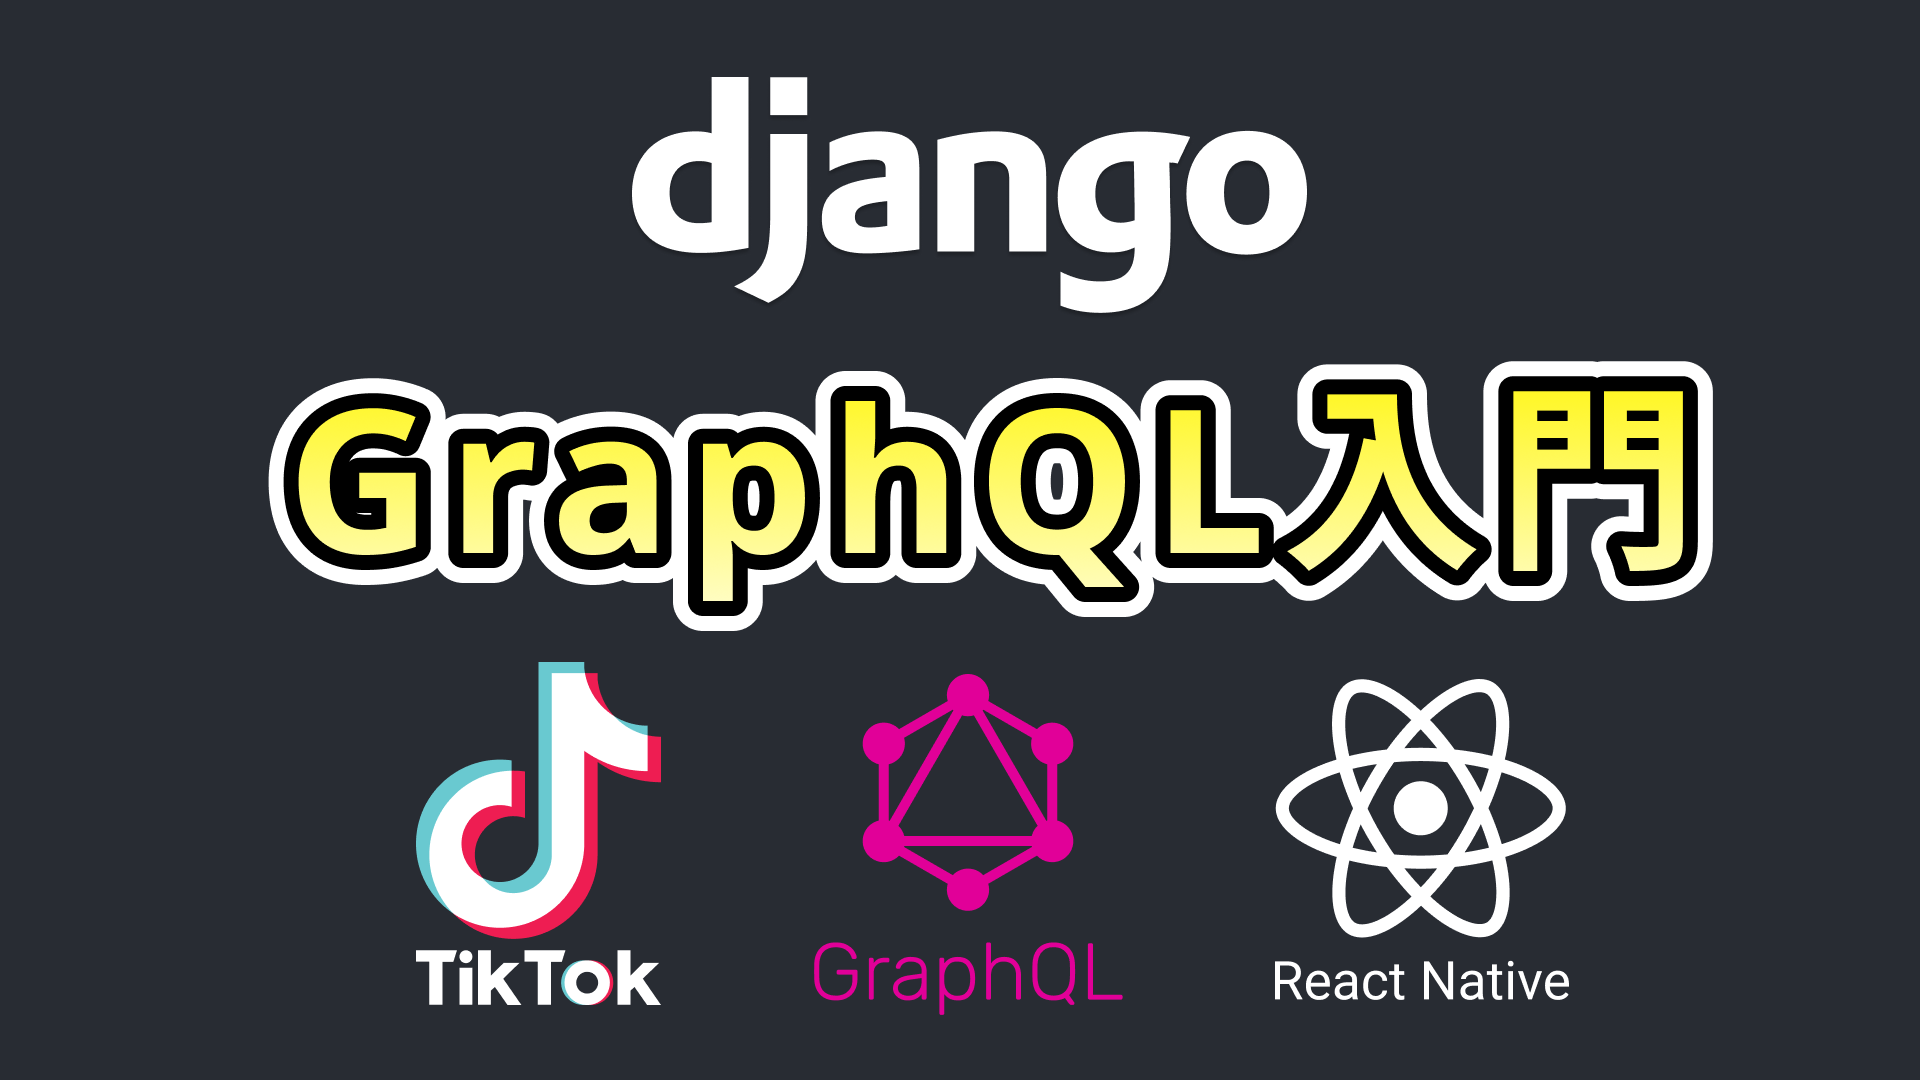 Django GraphQL入門とReact Native(TikTok)連携